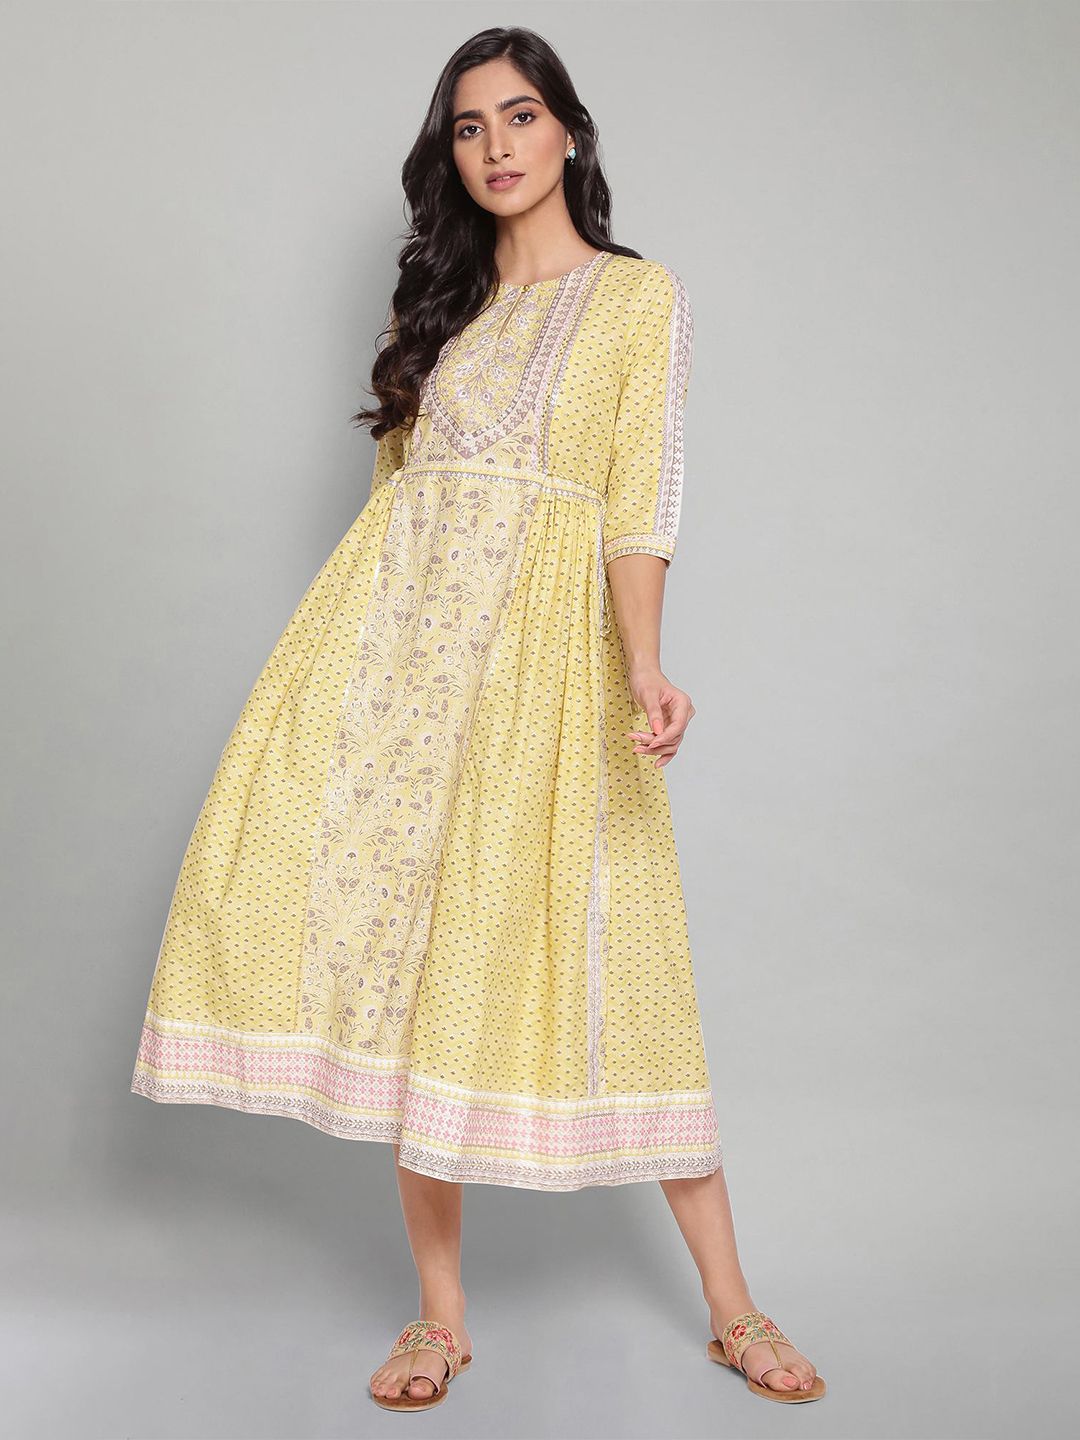 W Yellow Ethnic Motifs A-Line Cotton Midi Dress Price in India